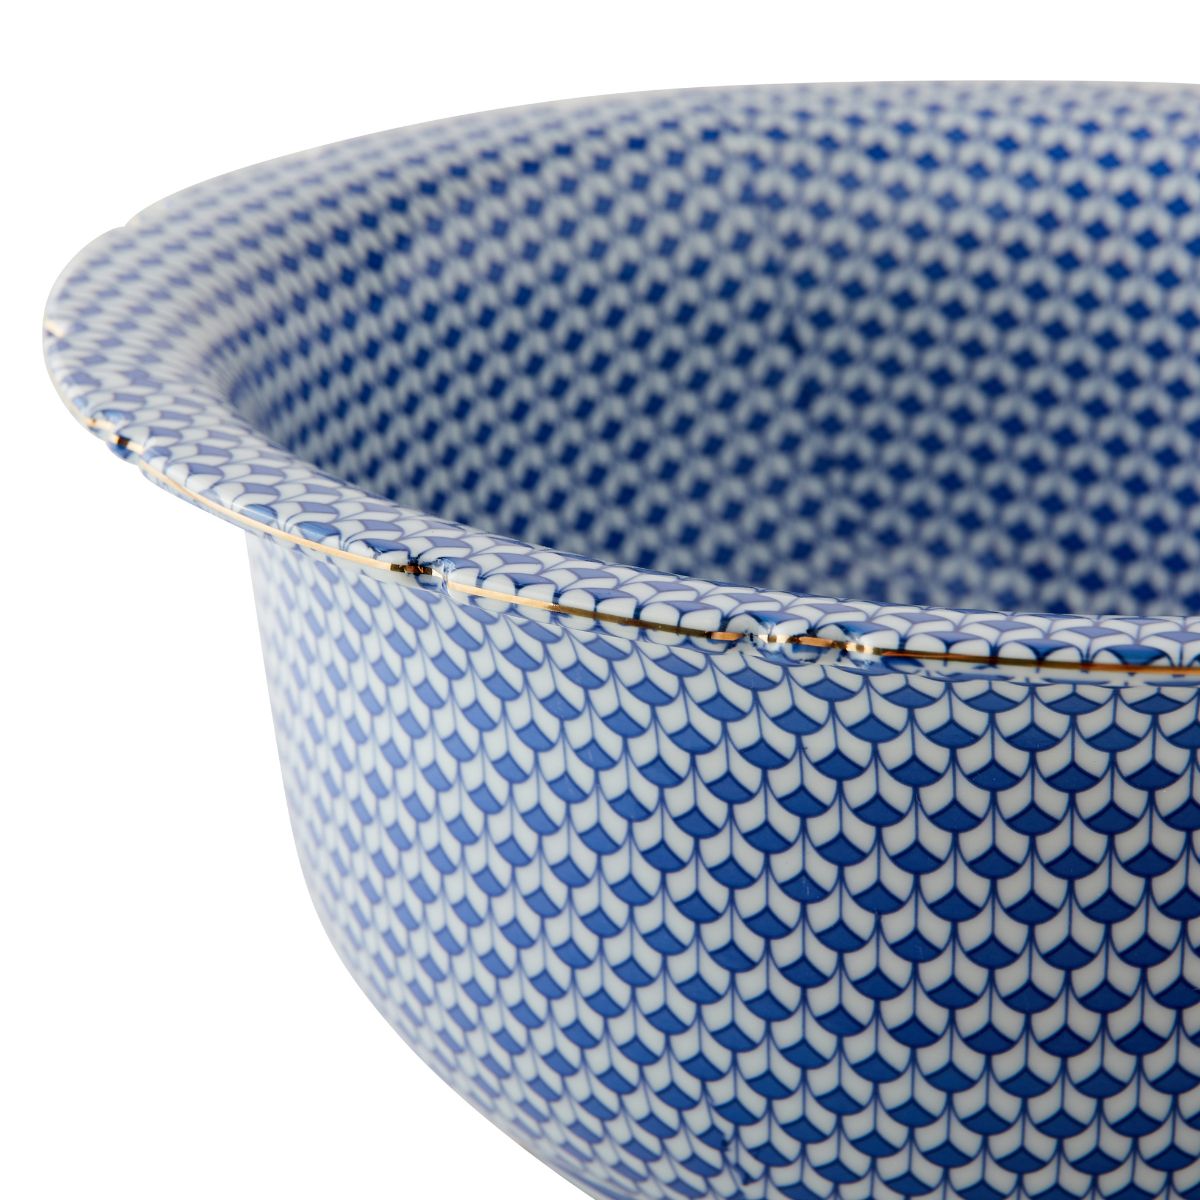 Large Azure Porcelain Bowl